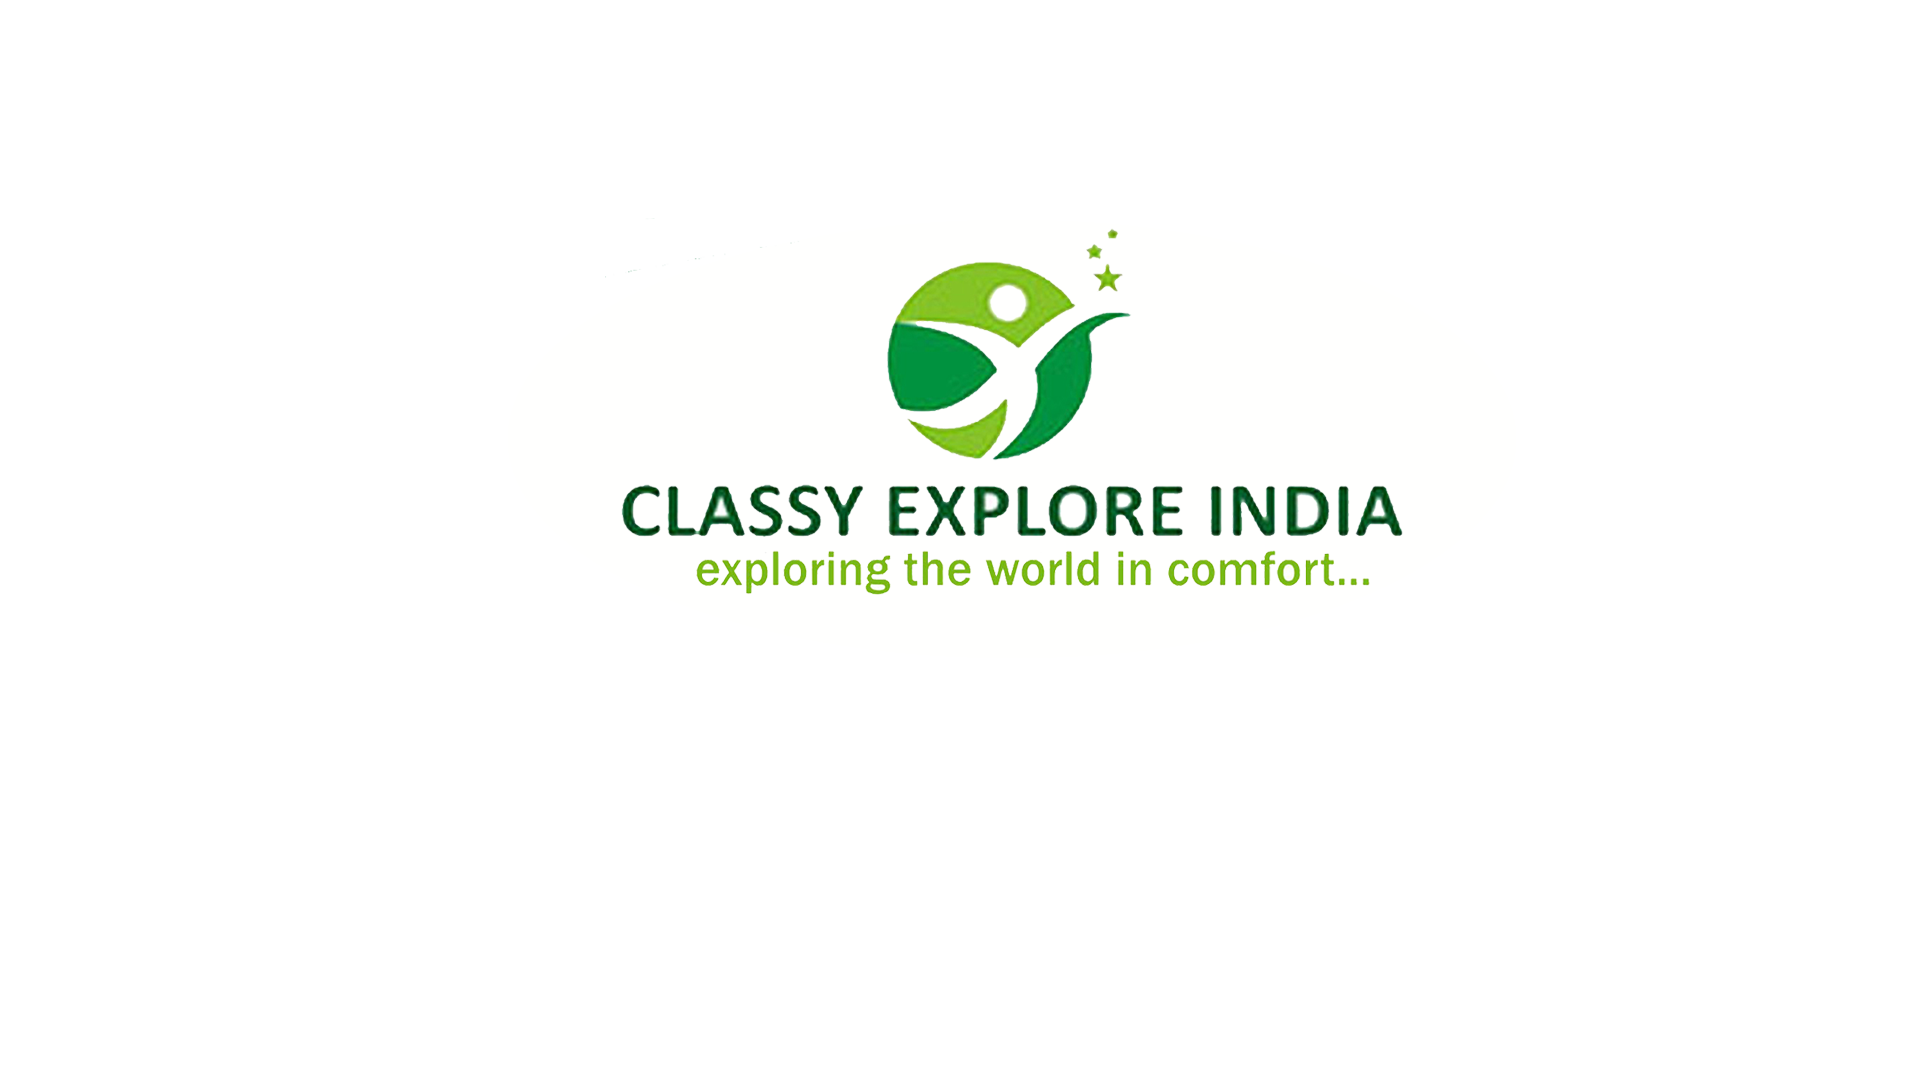 Classy Explore India Tours and Trav